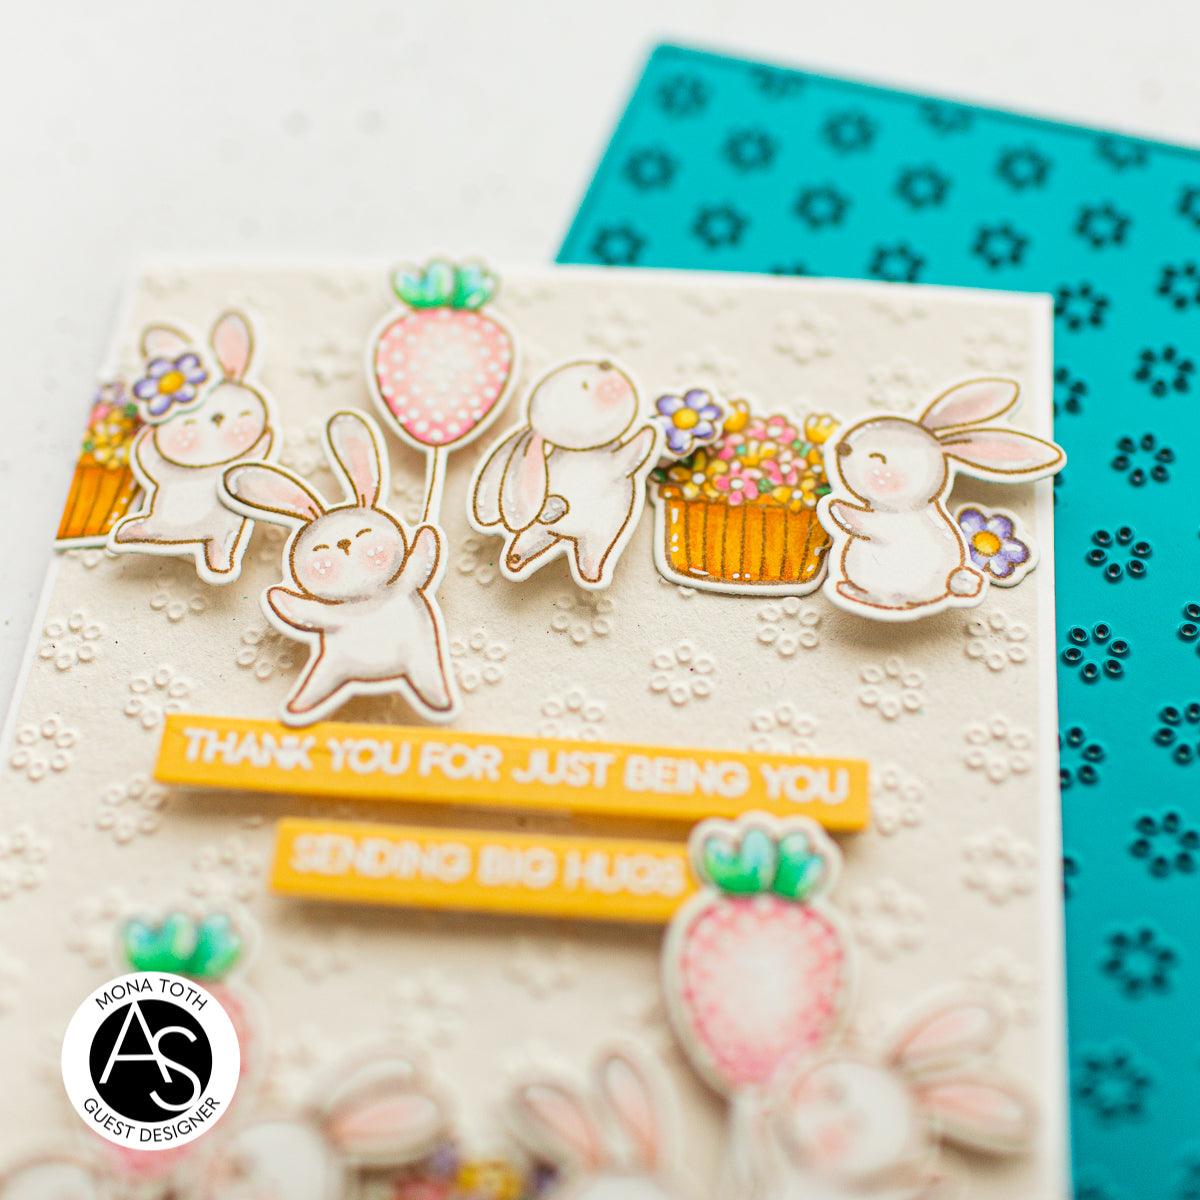 spring-bunnies-stamp-set-alex-syberia-designs-bunny-easter-cards-sentiments-egg-flowers-cardmakers-tutorials-blog-bunnies-spring-stamps-dies